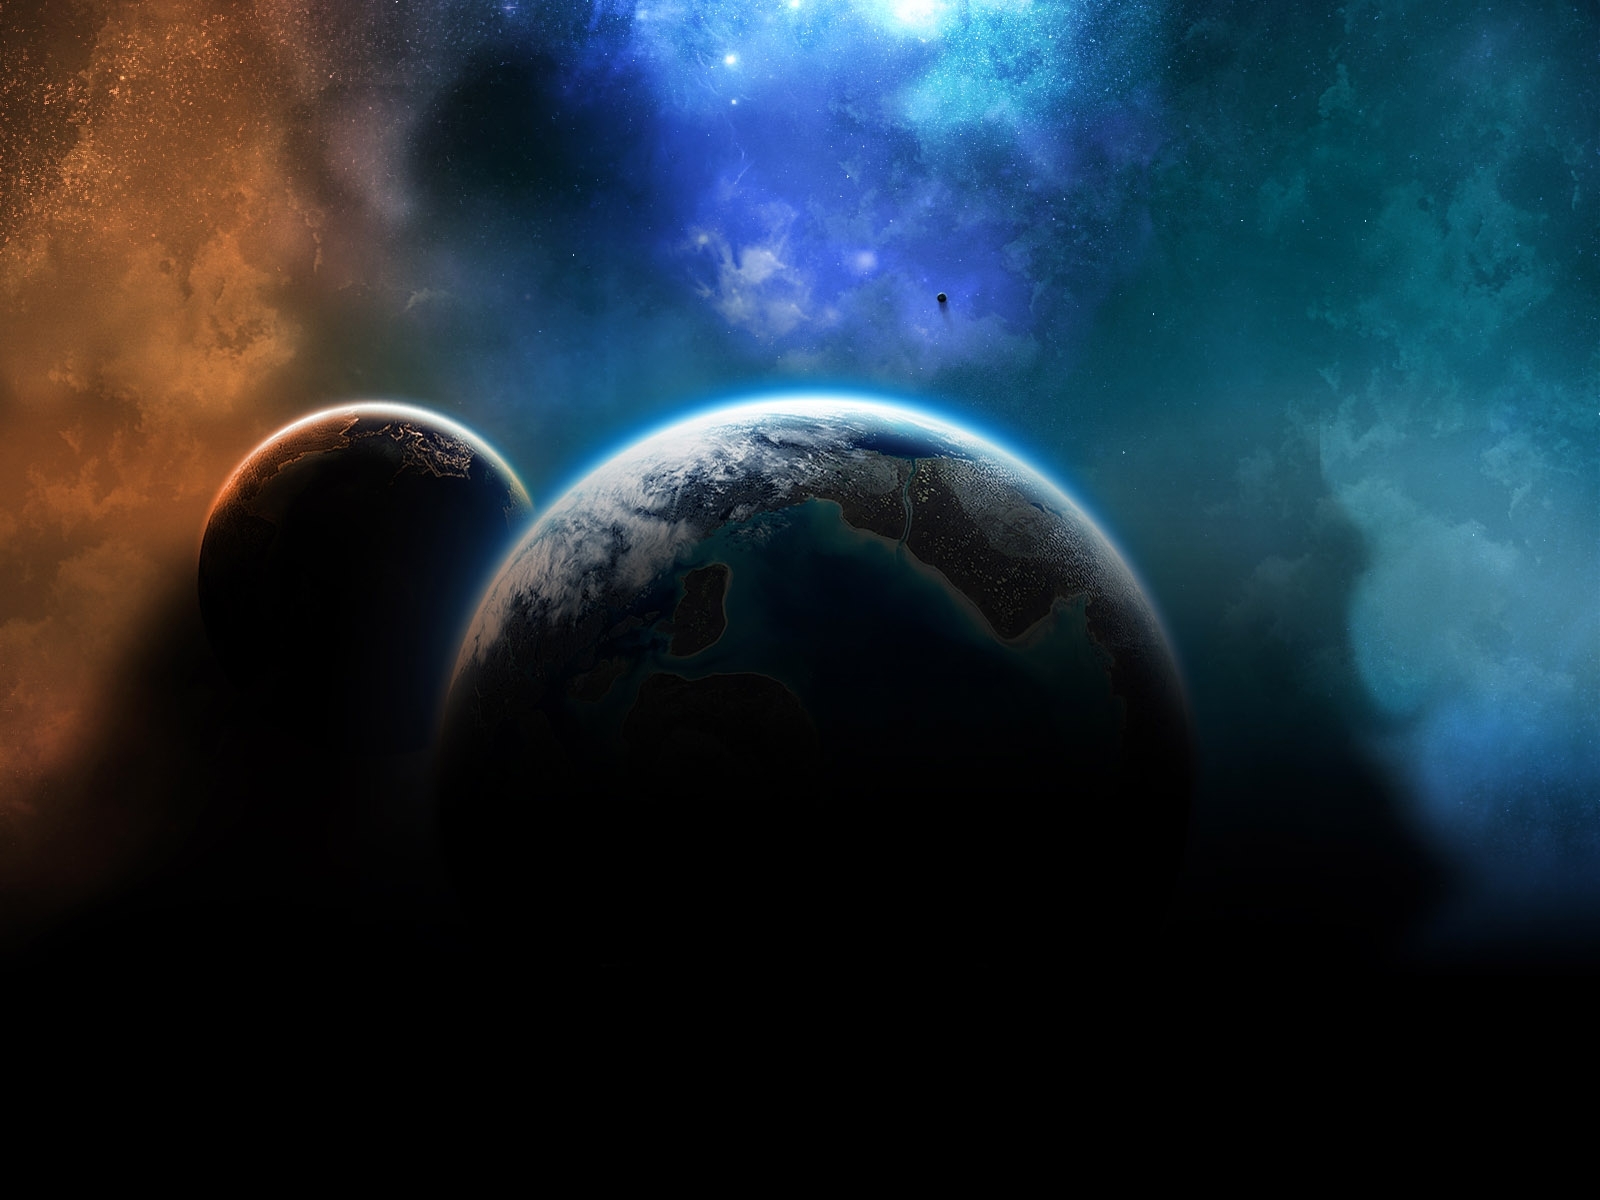 Descarga gratuita de fondo de pantalla para móvil de Paisaje, Universo, Planetas.